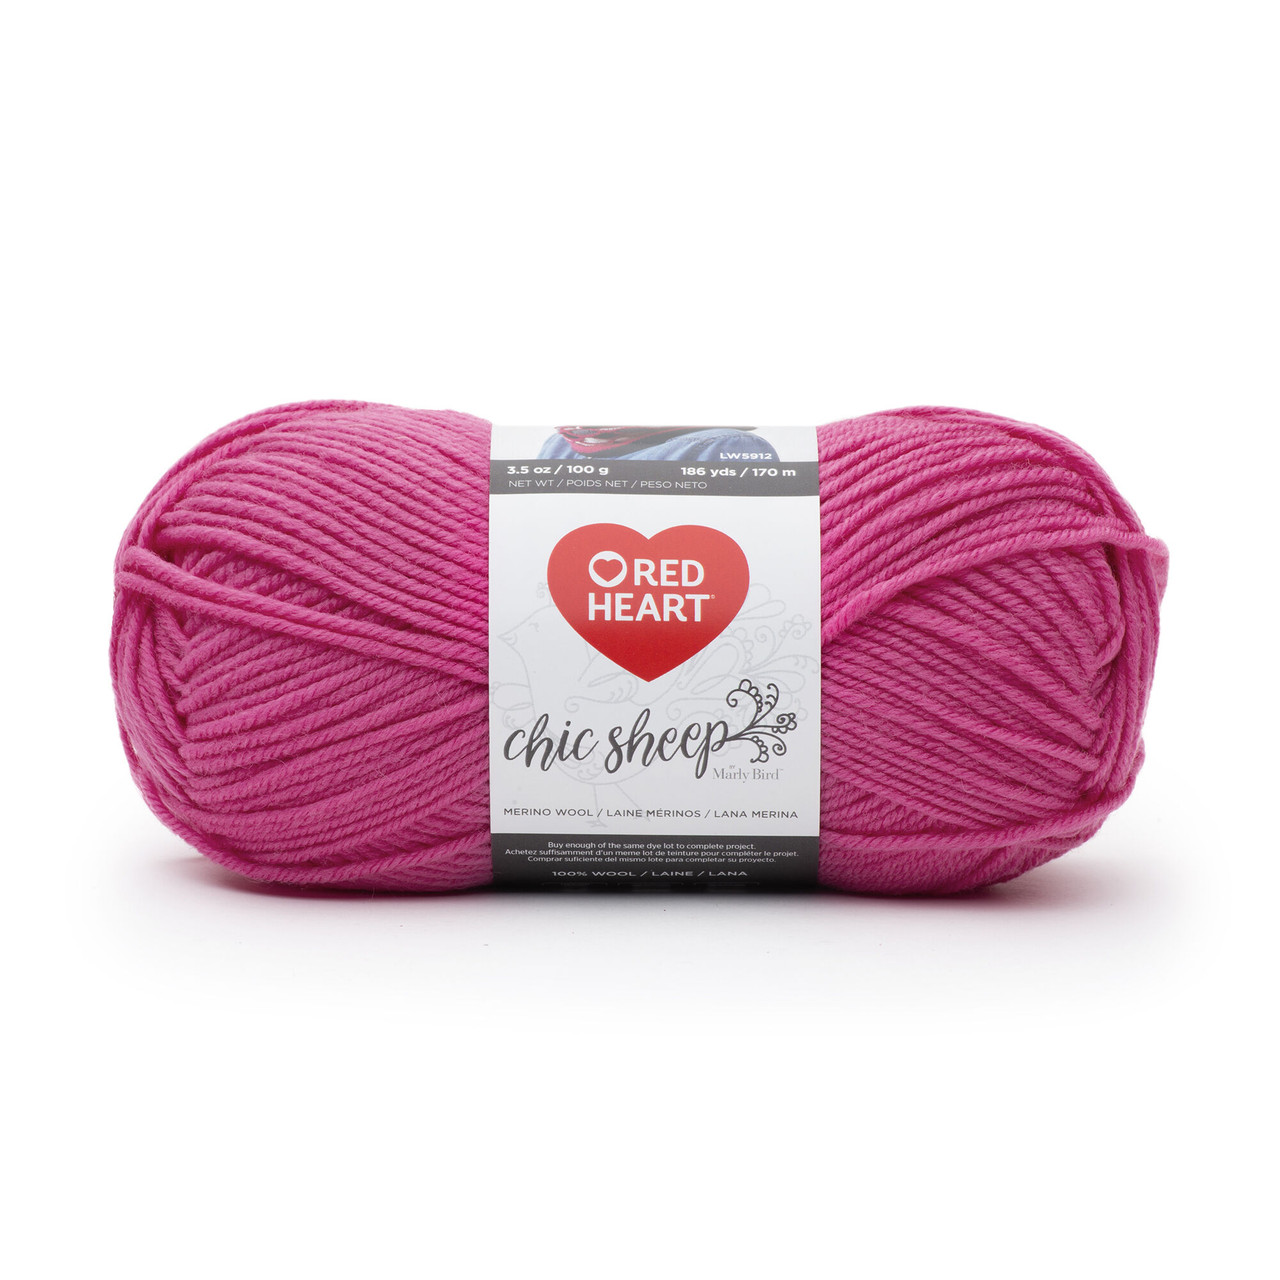 Red Heart Chic Sheep Merino Wool by Marley Fairy Tale Knitting & Crochet Yarn